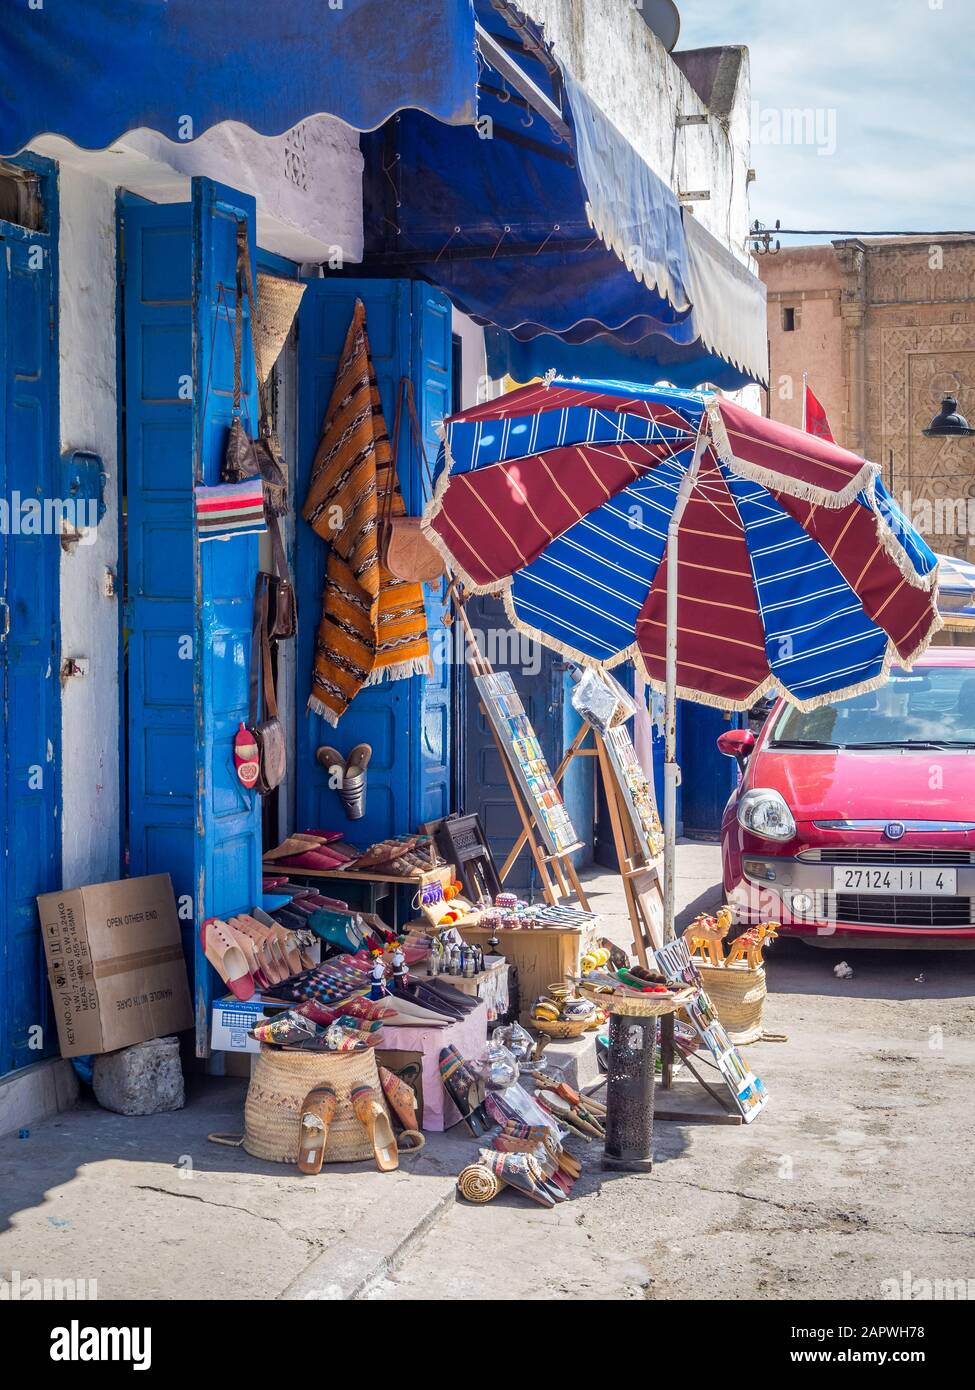 RABAT, MOROCCO - Jun 04, 2018: Traditional Moroccan street market or souk in the old part of Rabat medina Stock Photo